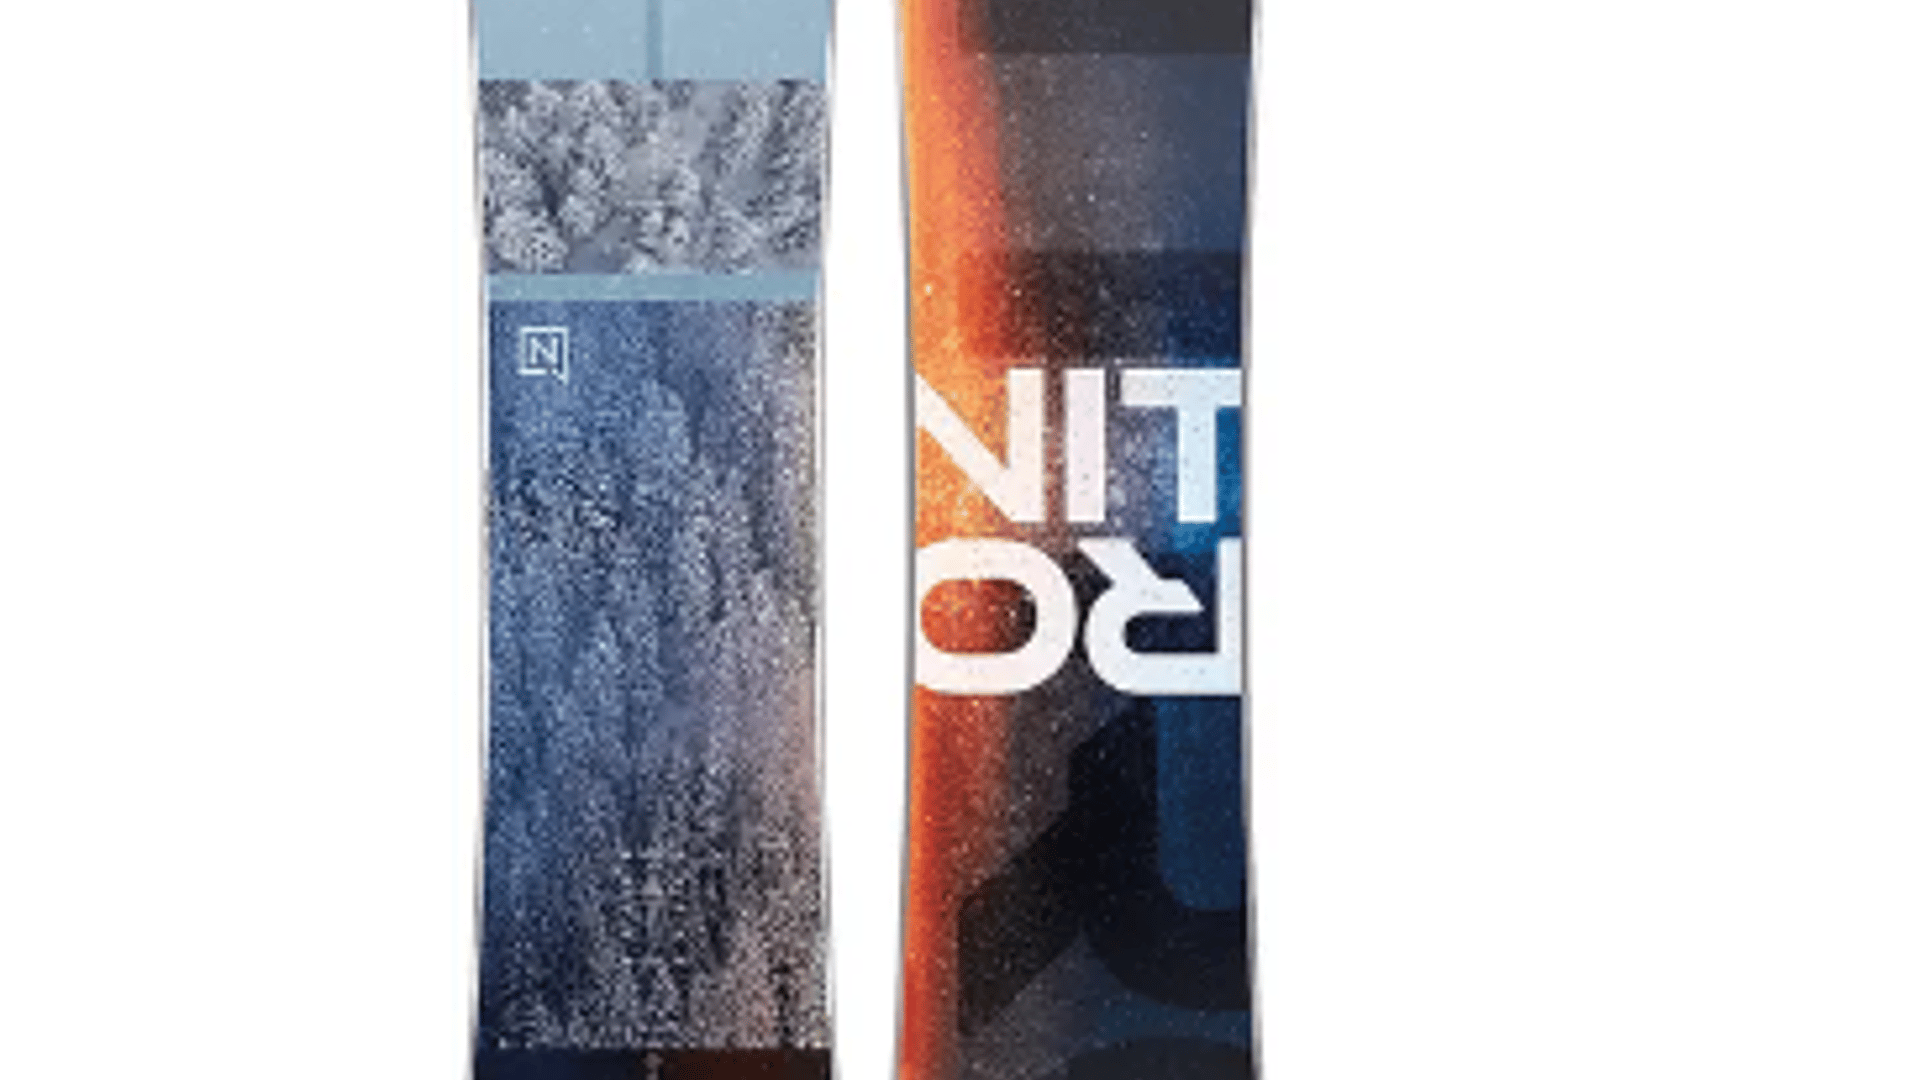 Snowboard: Nitro Prime View 155cm